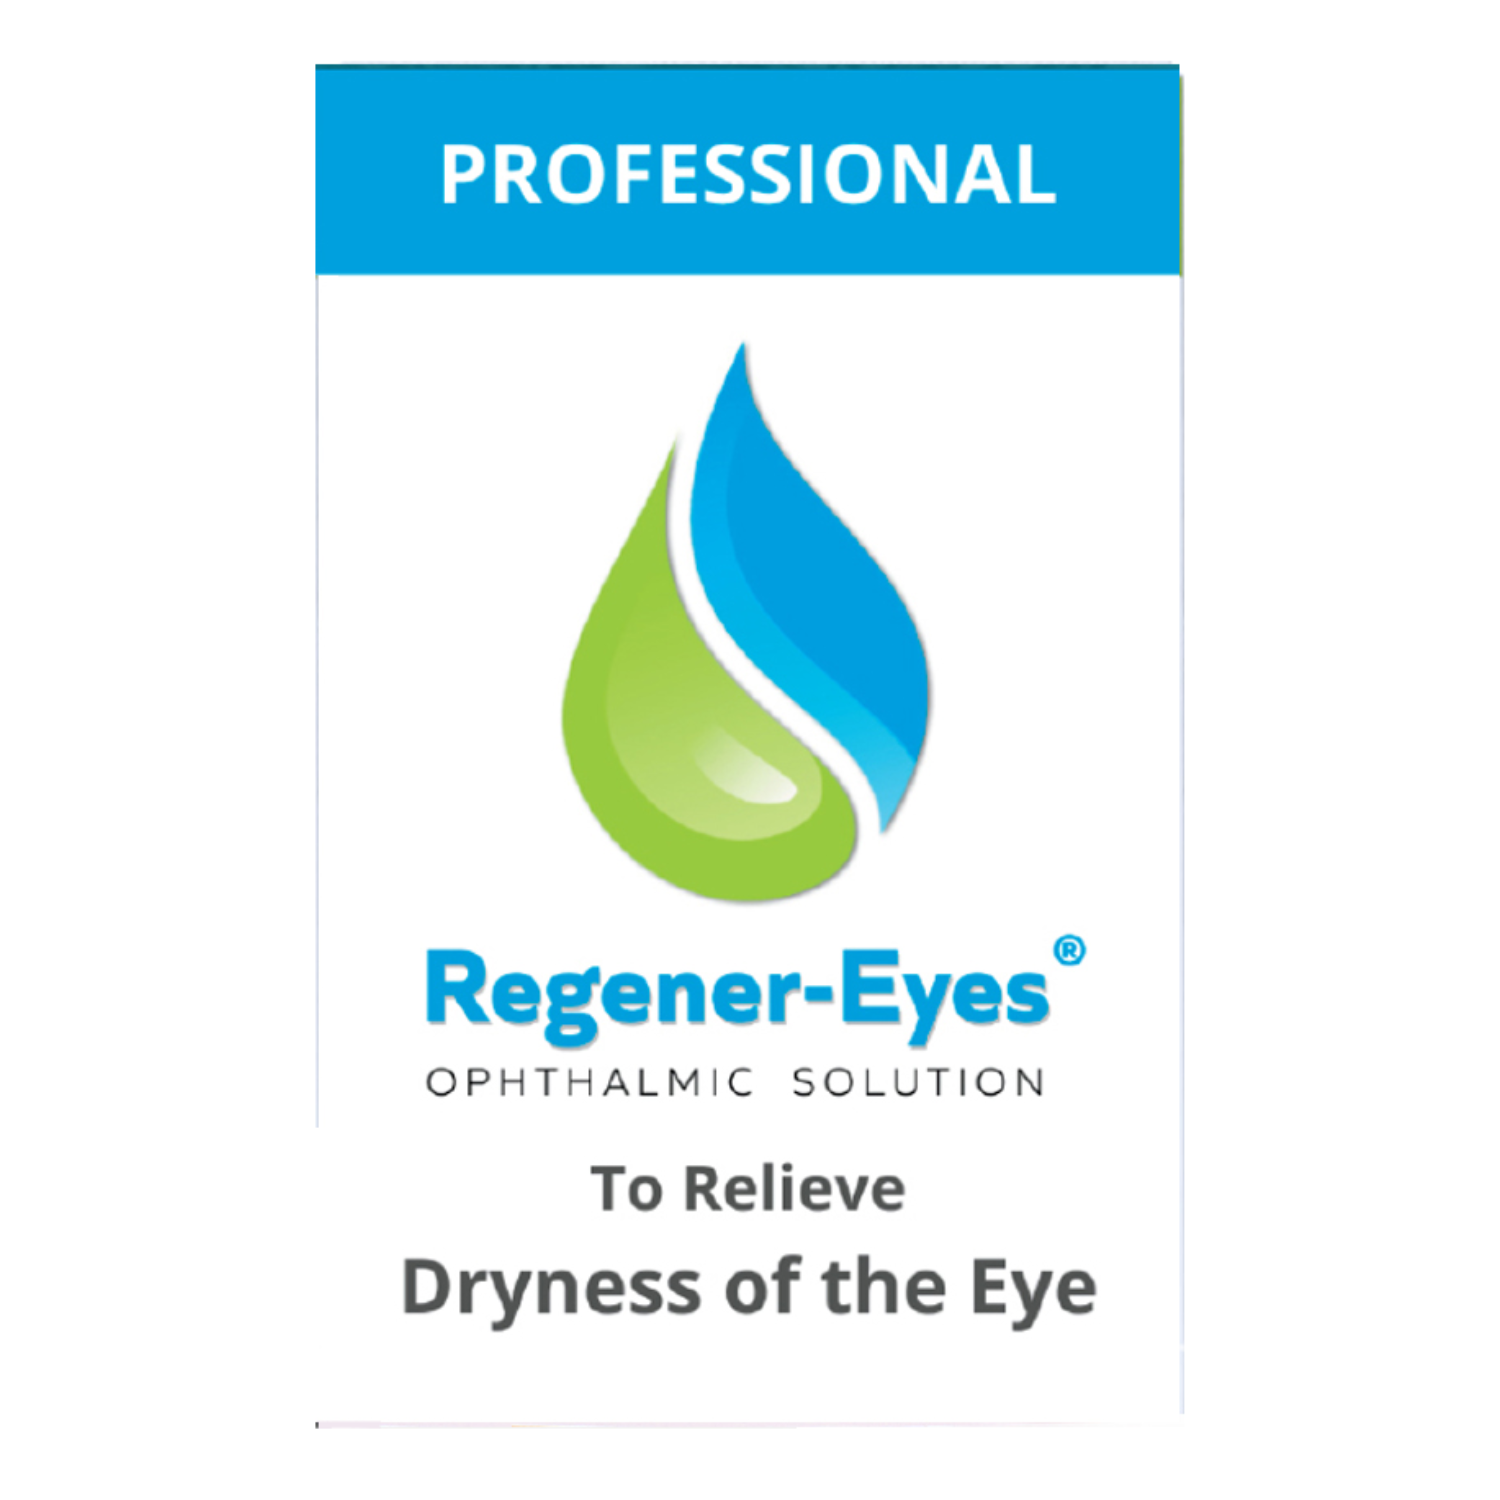 Regener-Eyes Ophthalmic Solution Pro